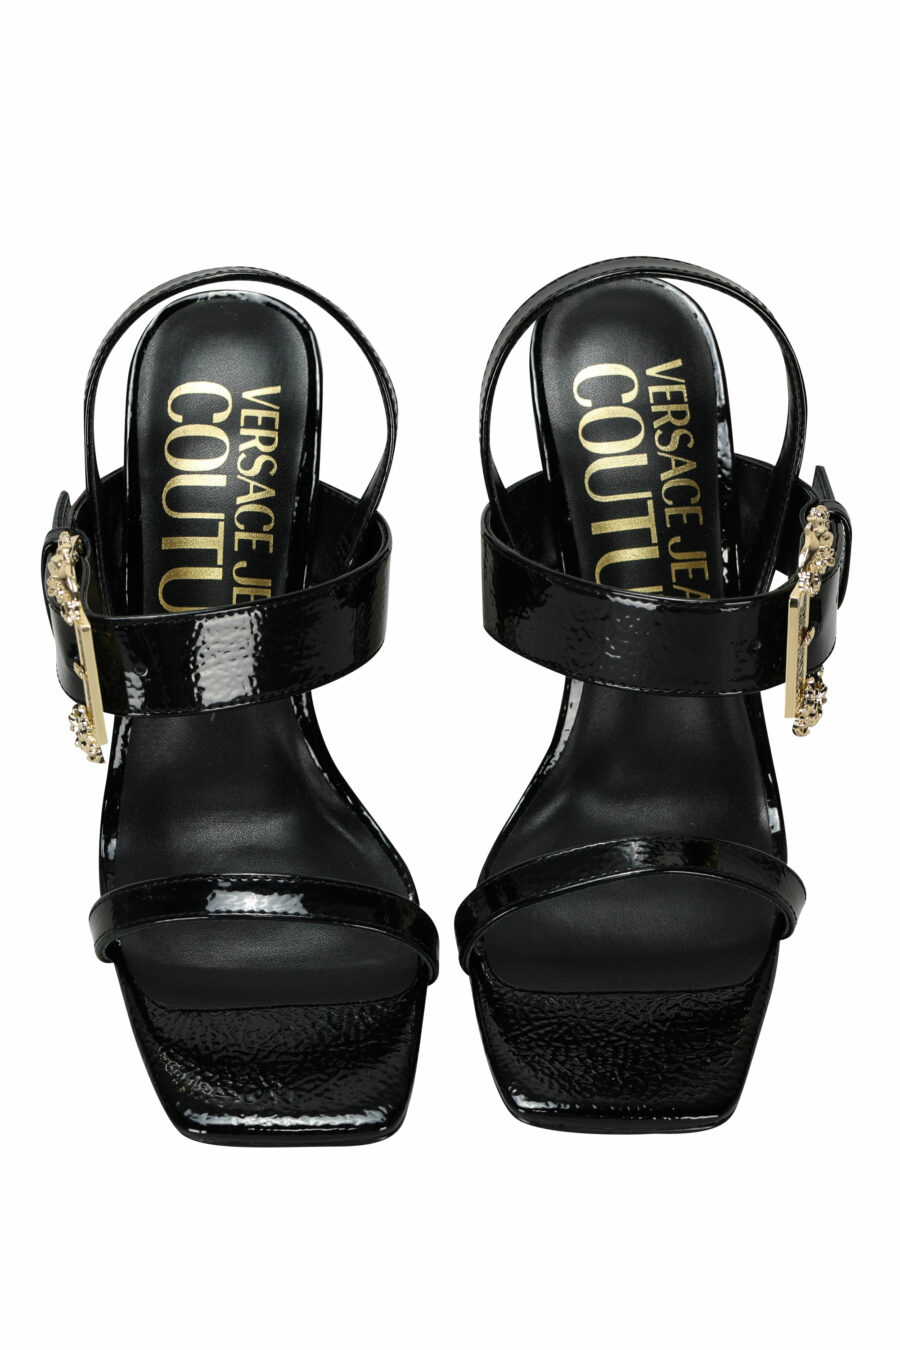 Black stiletto heels with gold baroque buckle - 8052019607789 4